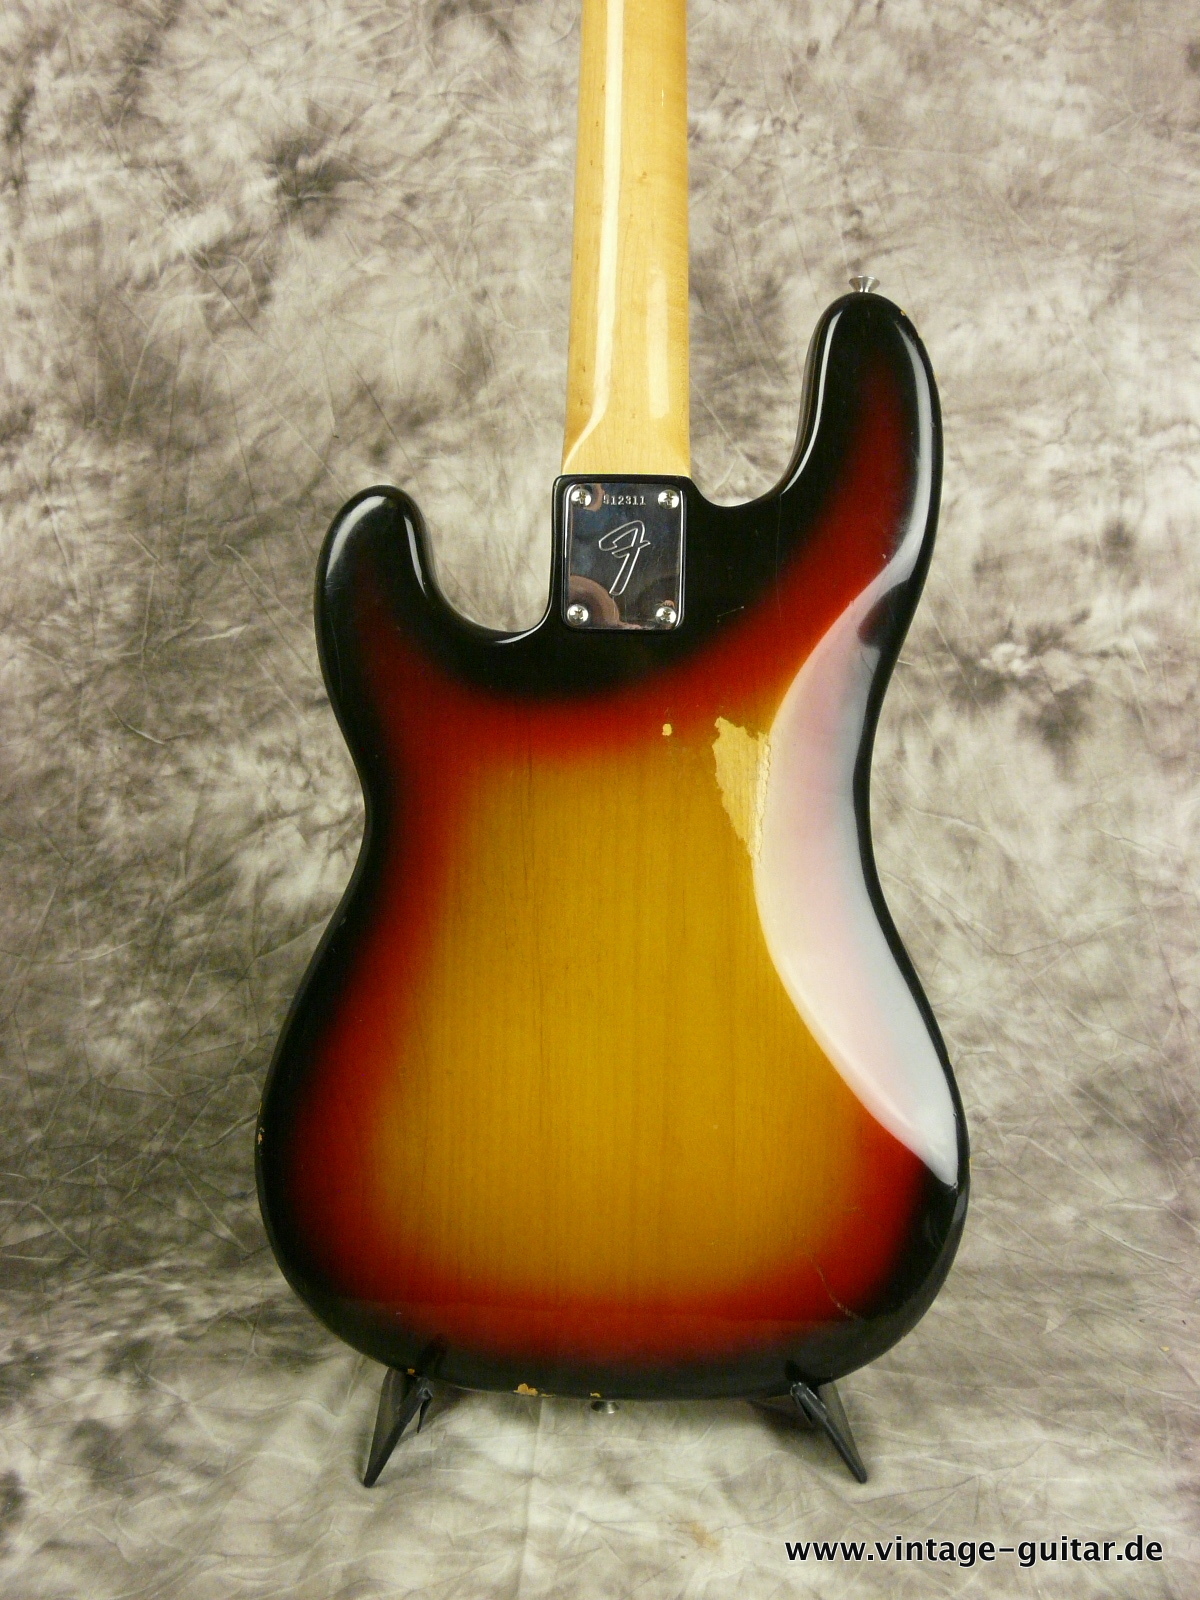 Fender-Precision_Bass-1973-sunburst-J-Bass-Pickup-004.JPG